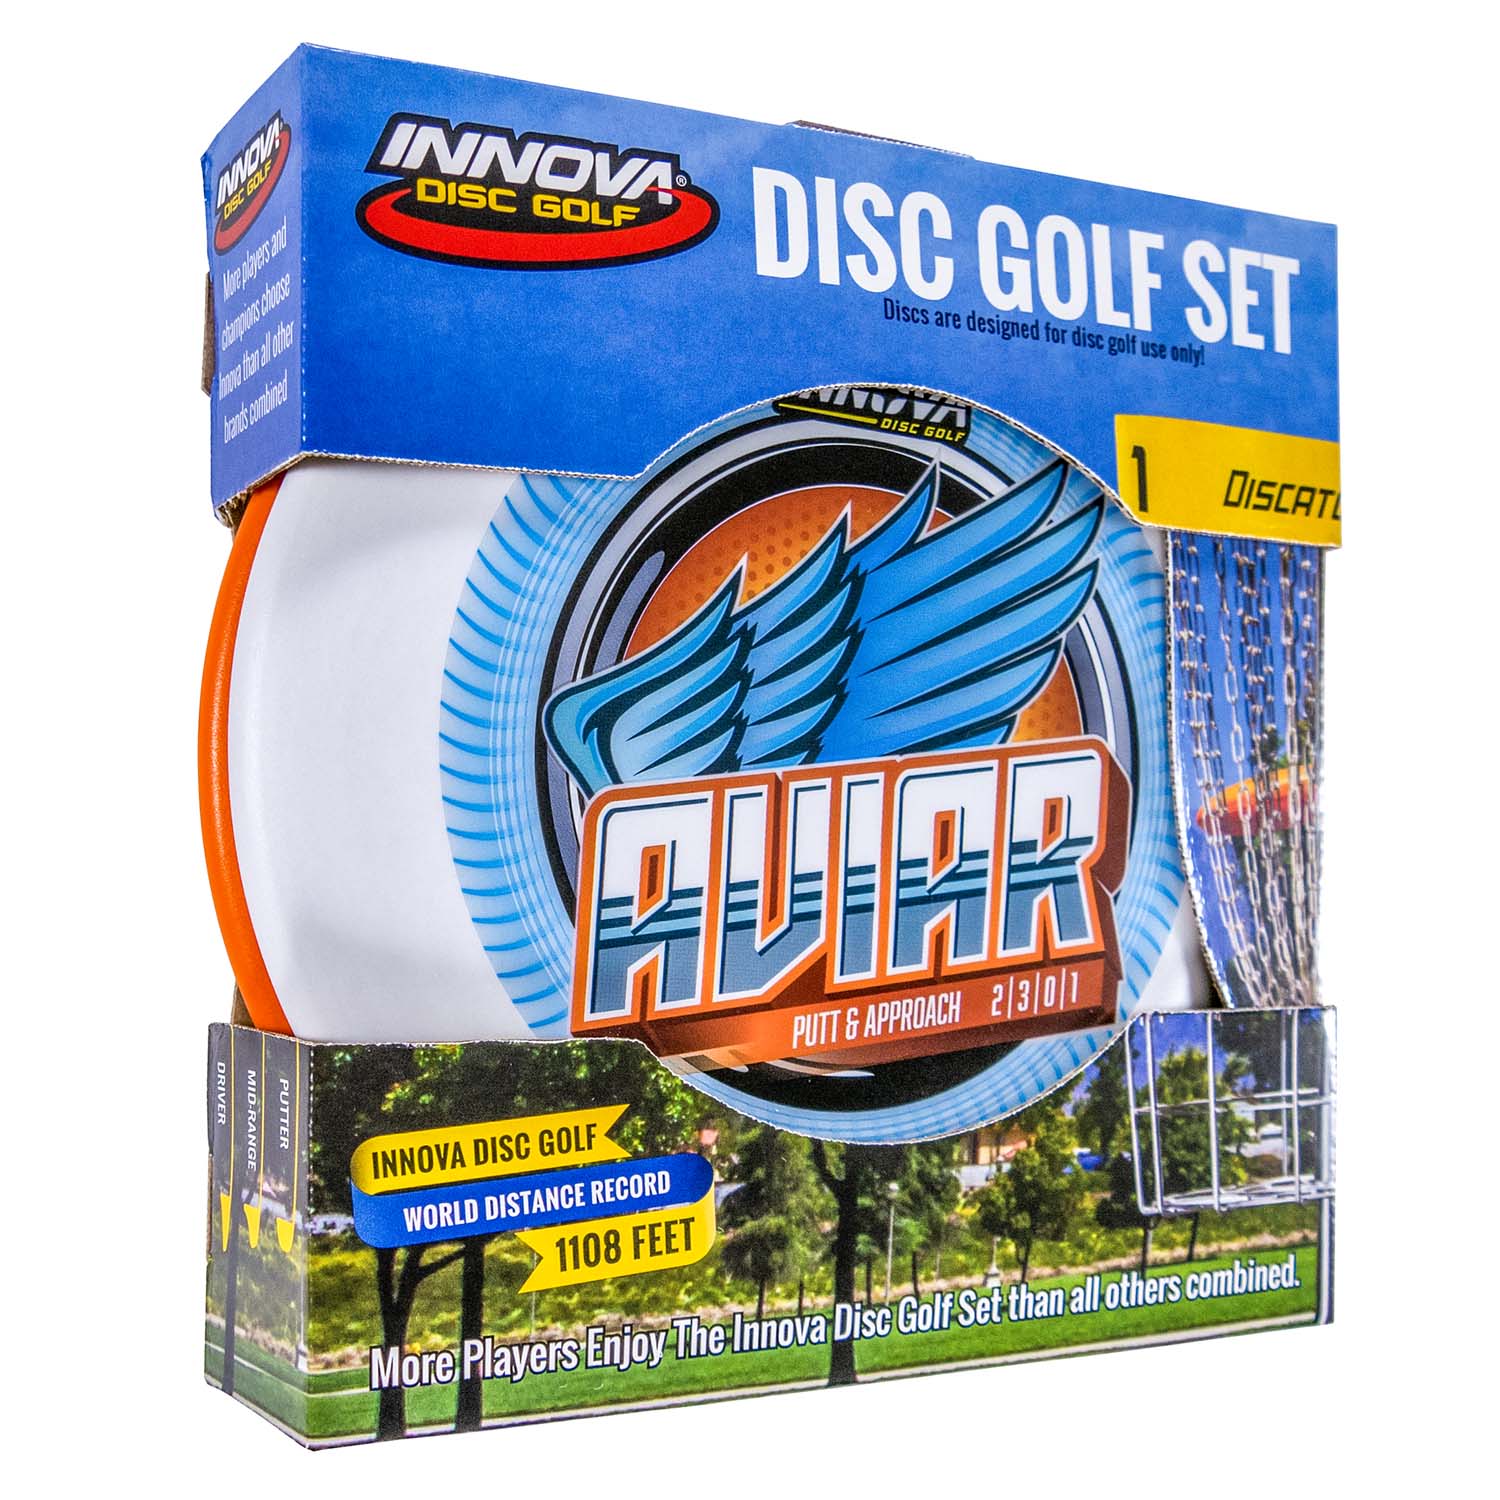 Innova Discs - best selection of Innova Disc Golf discs